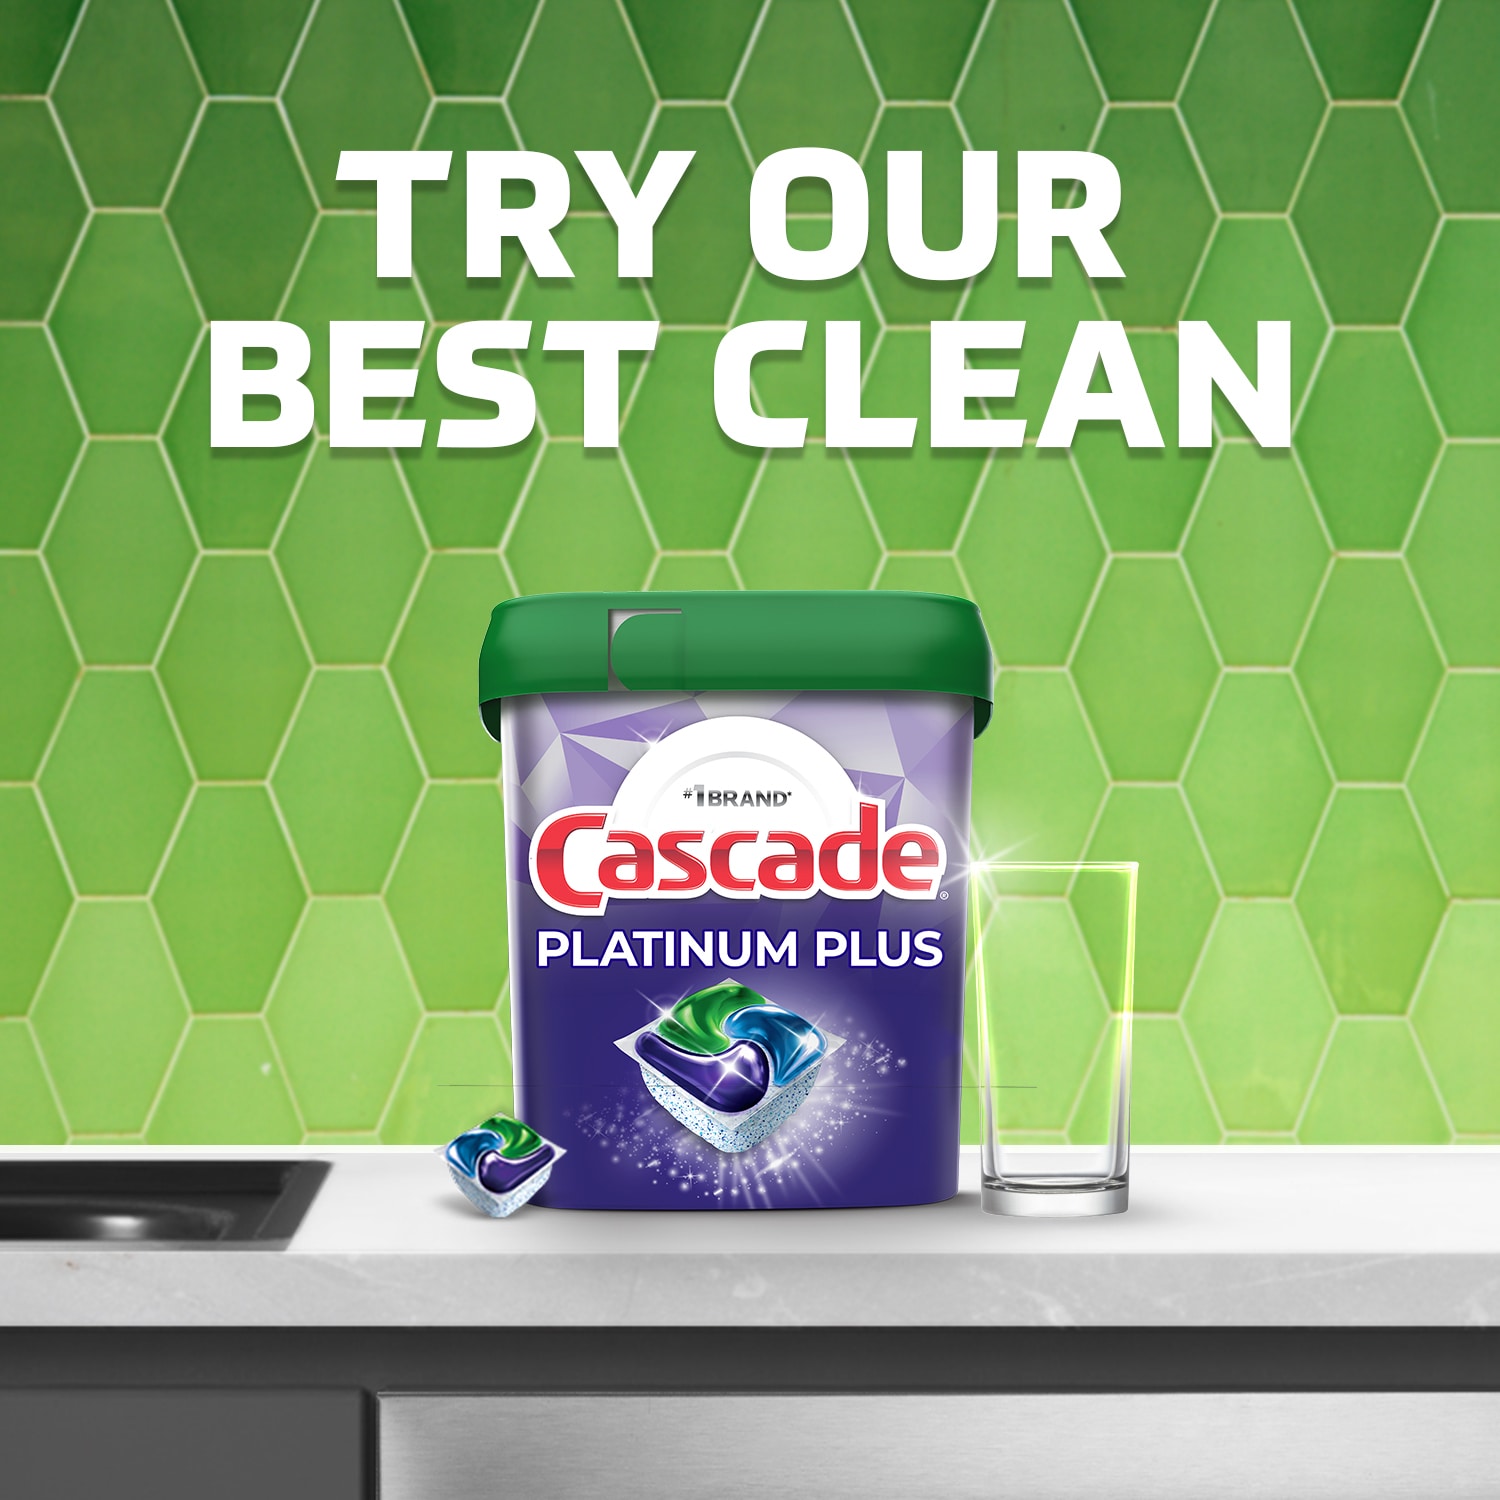 Finish Quantum Ultimate Plus Dishwasher Detergent, 88 Tablets